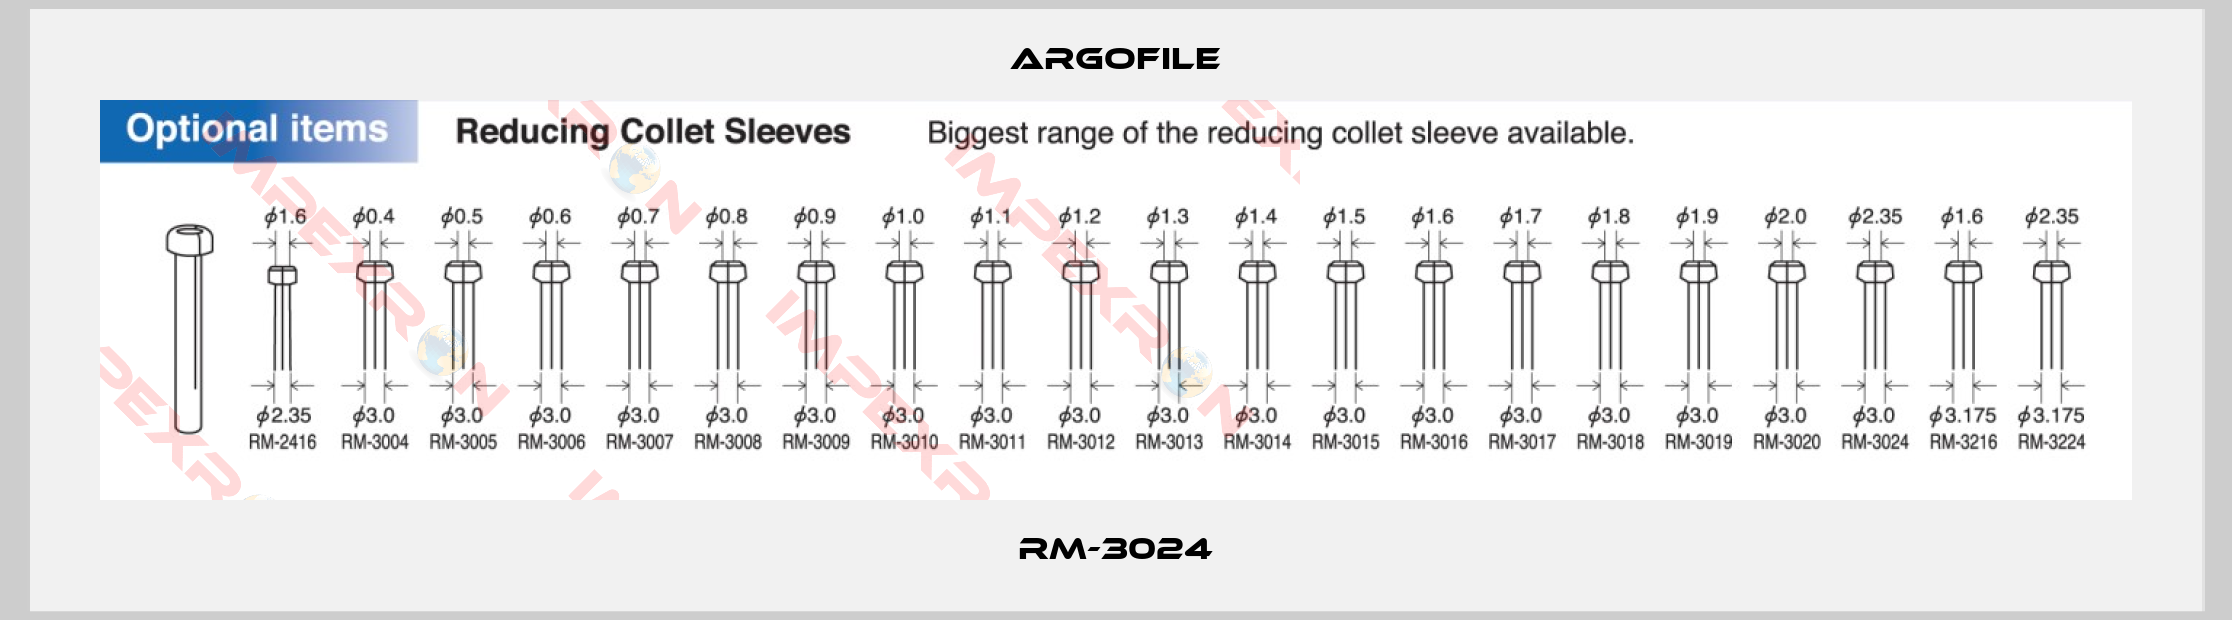 Argofile-RM-3024